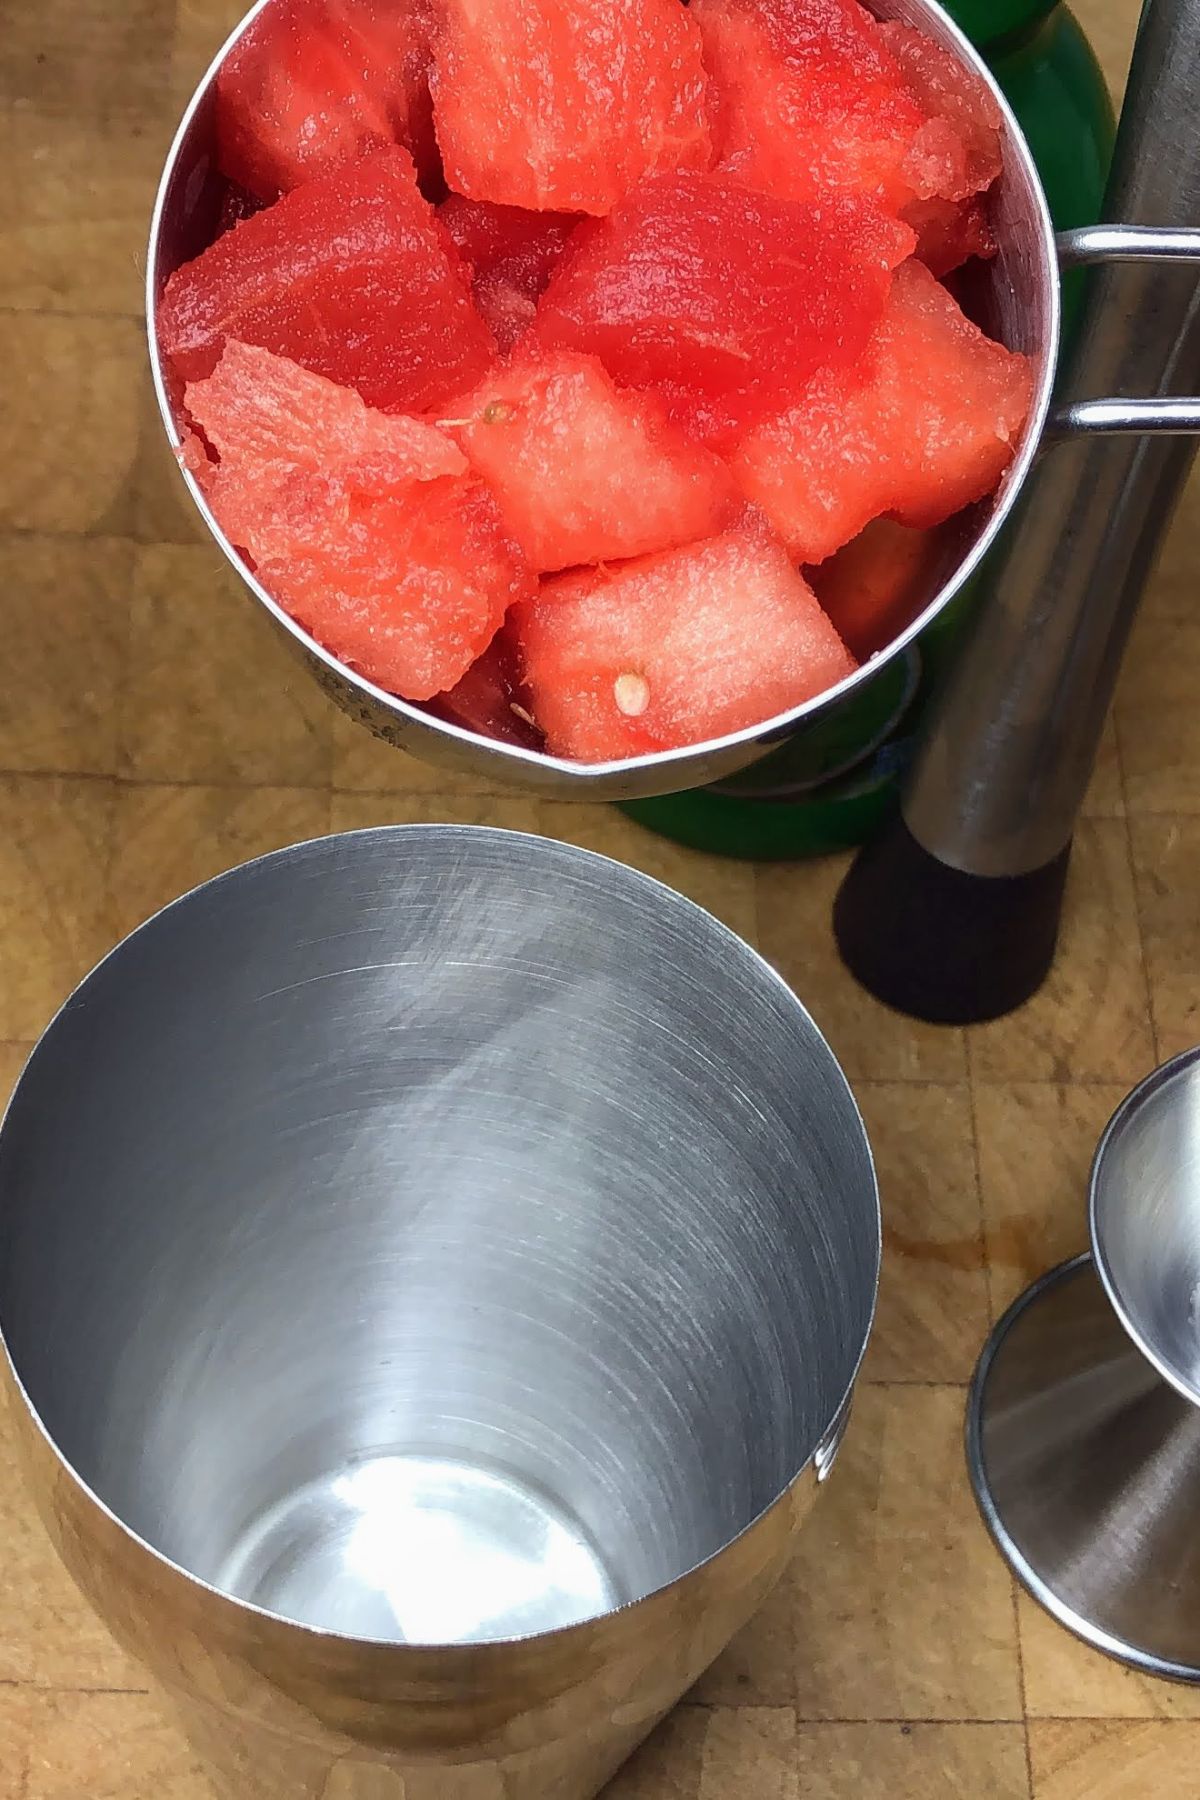 Dumping watermelon chunks into a shaker.